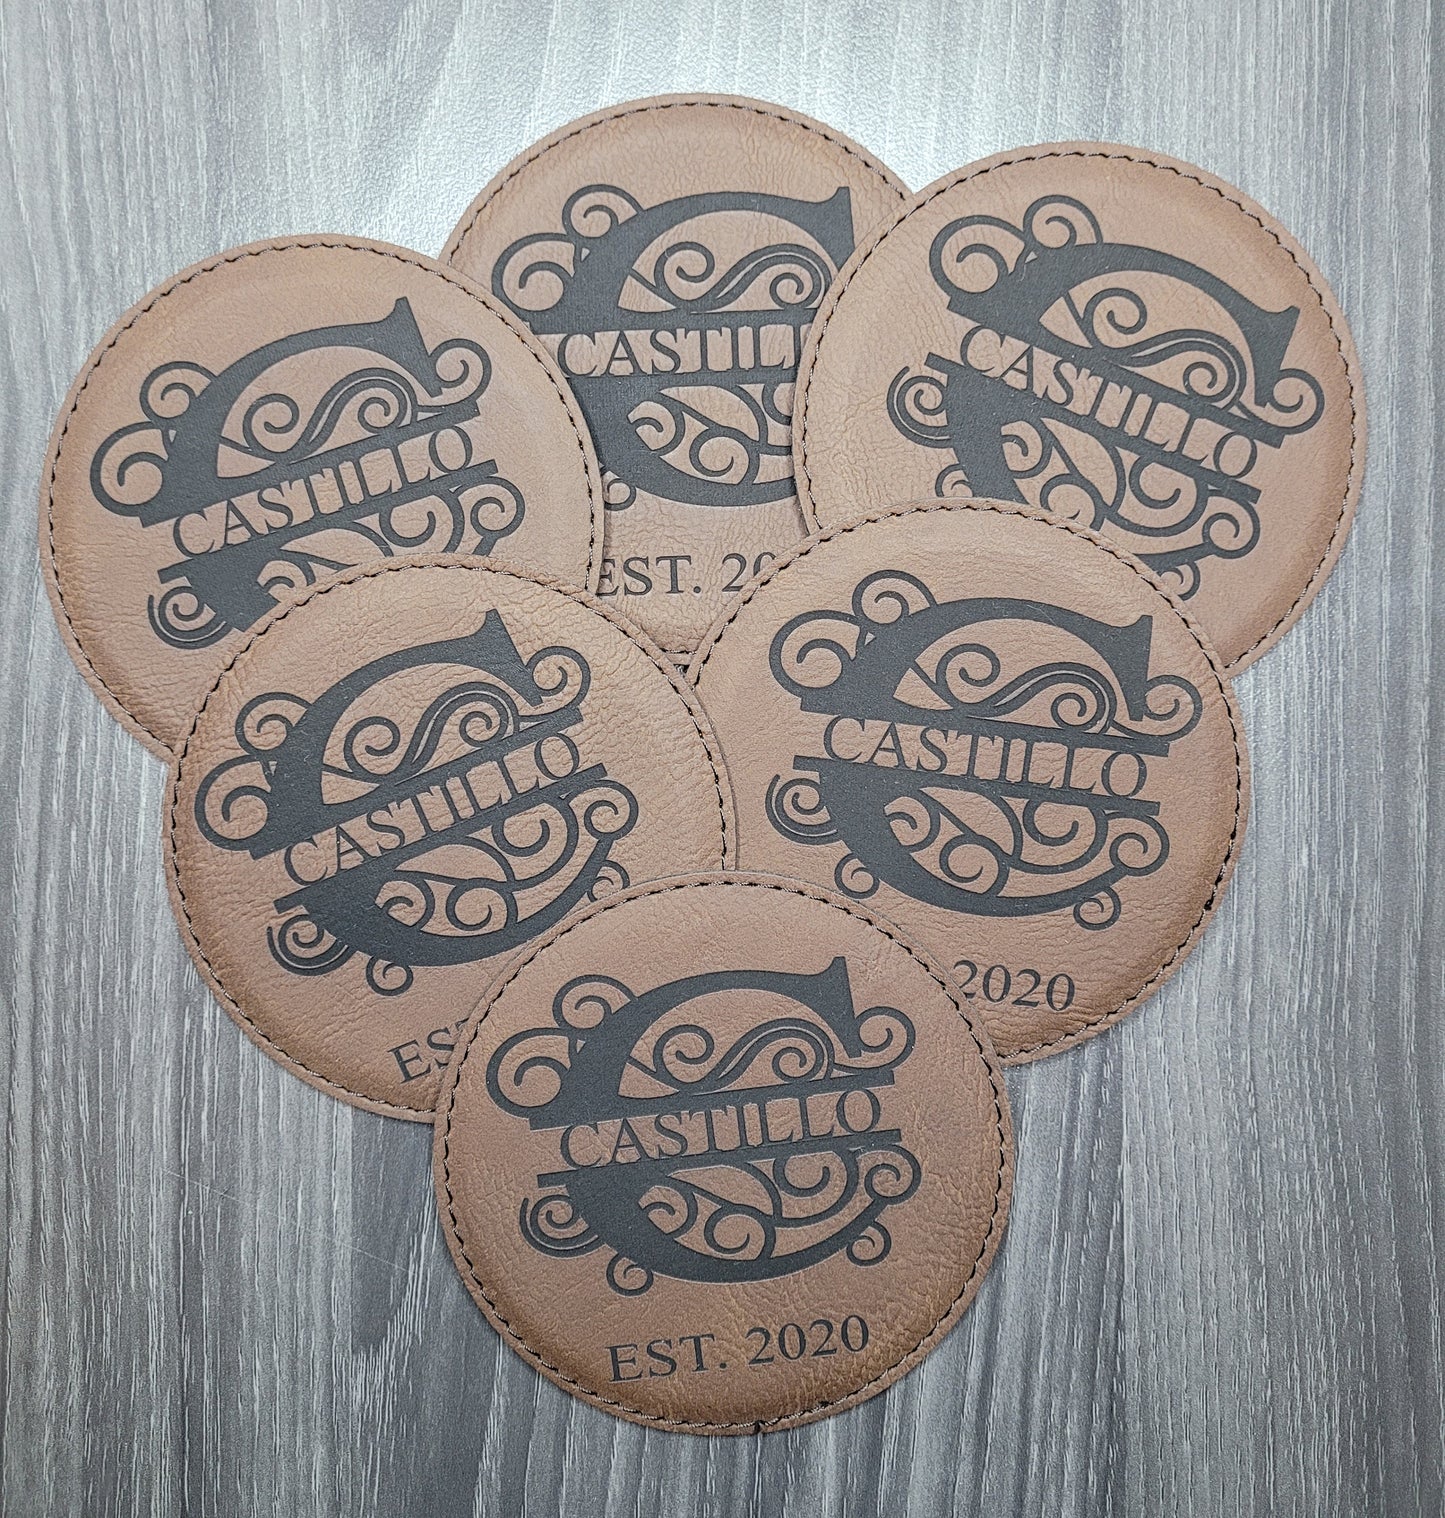 Monogram Brown Leatherette Coasters / Leather Coasters